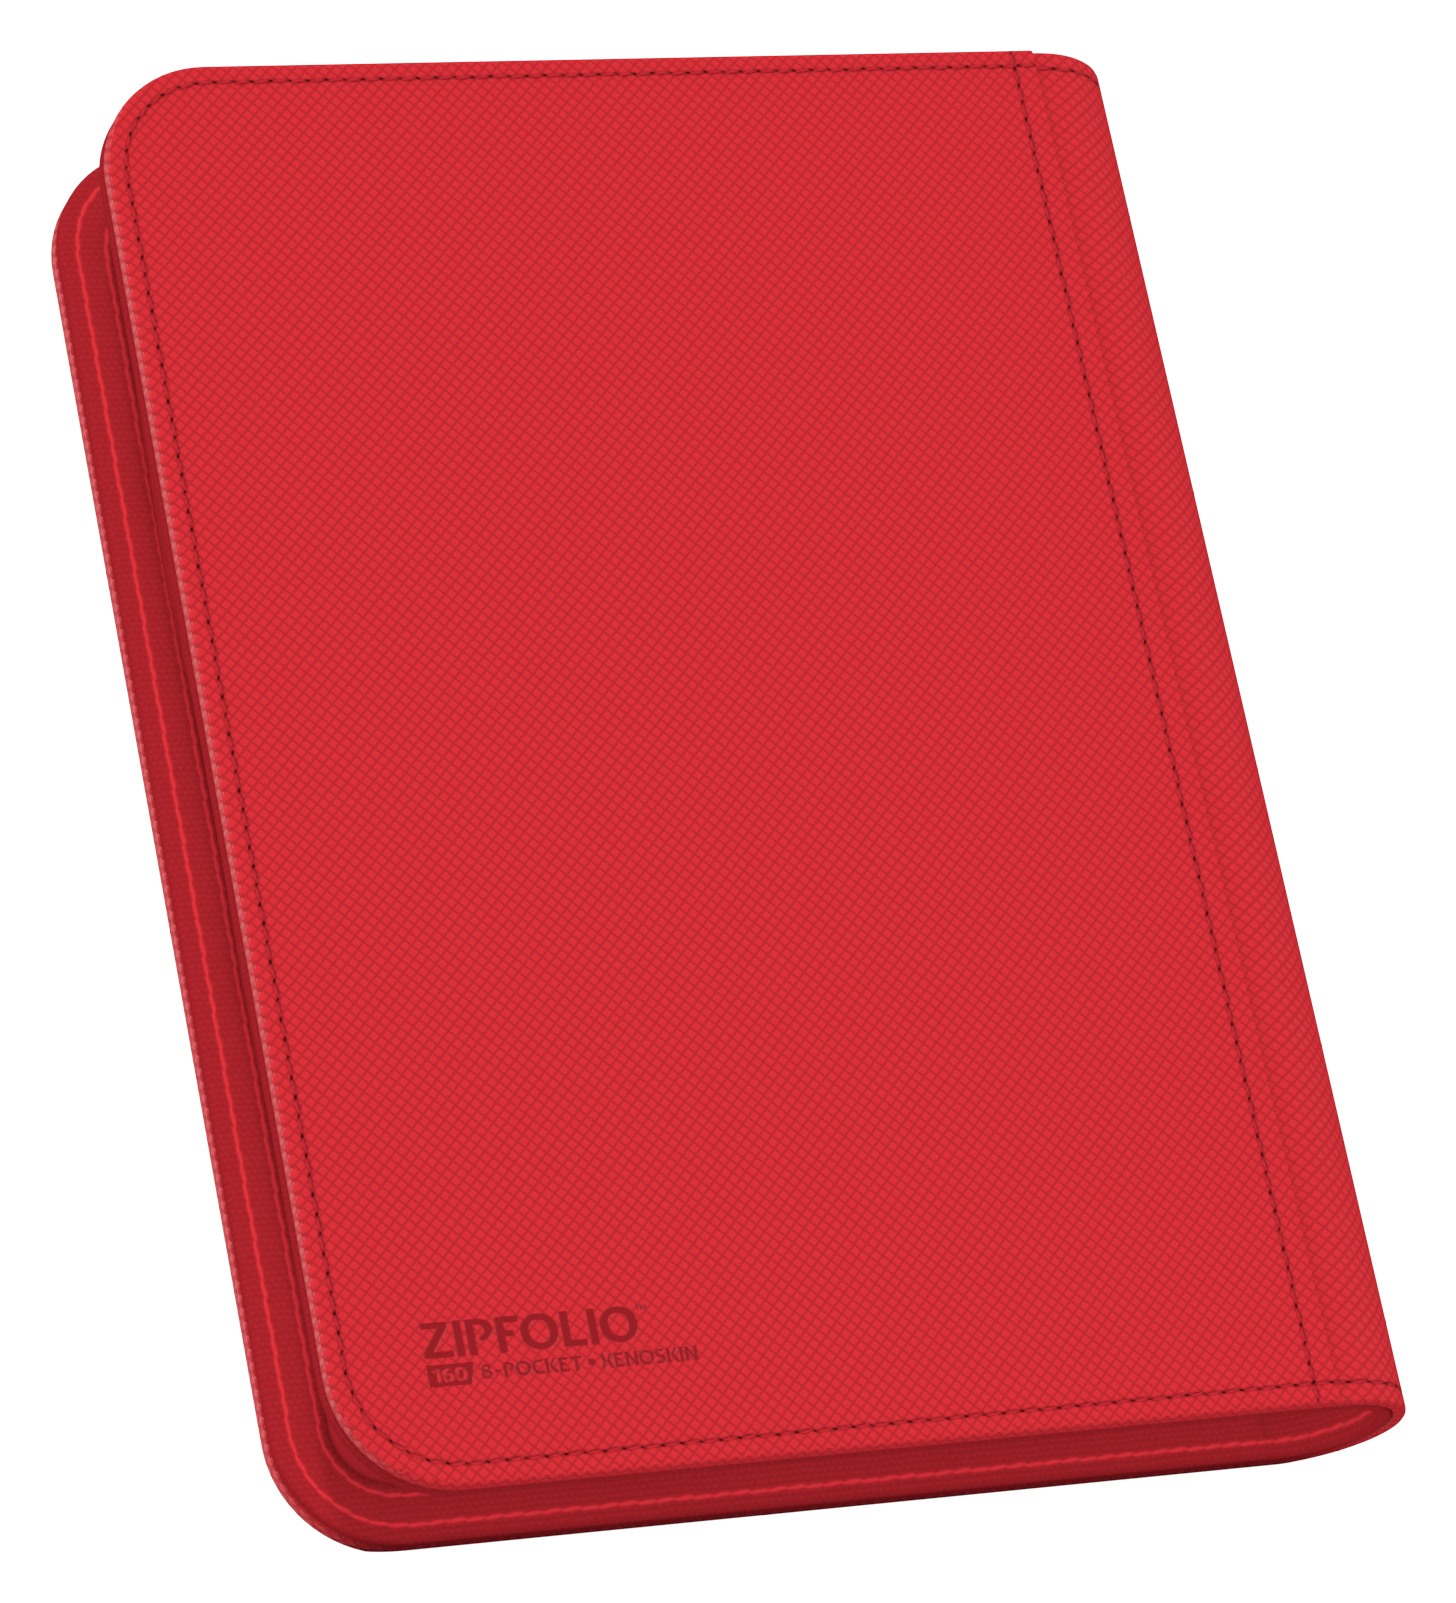 Zipfolio Xenoskin | Red | 160 – 8 Pockets per page - Ultimate Guard